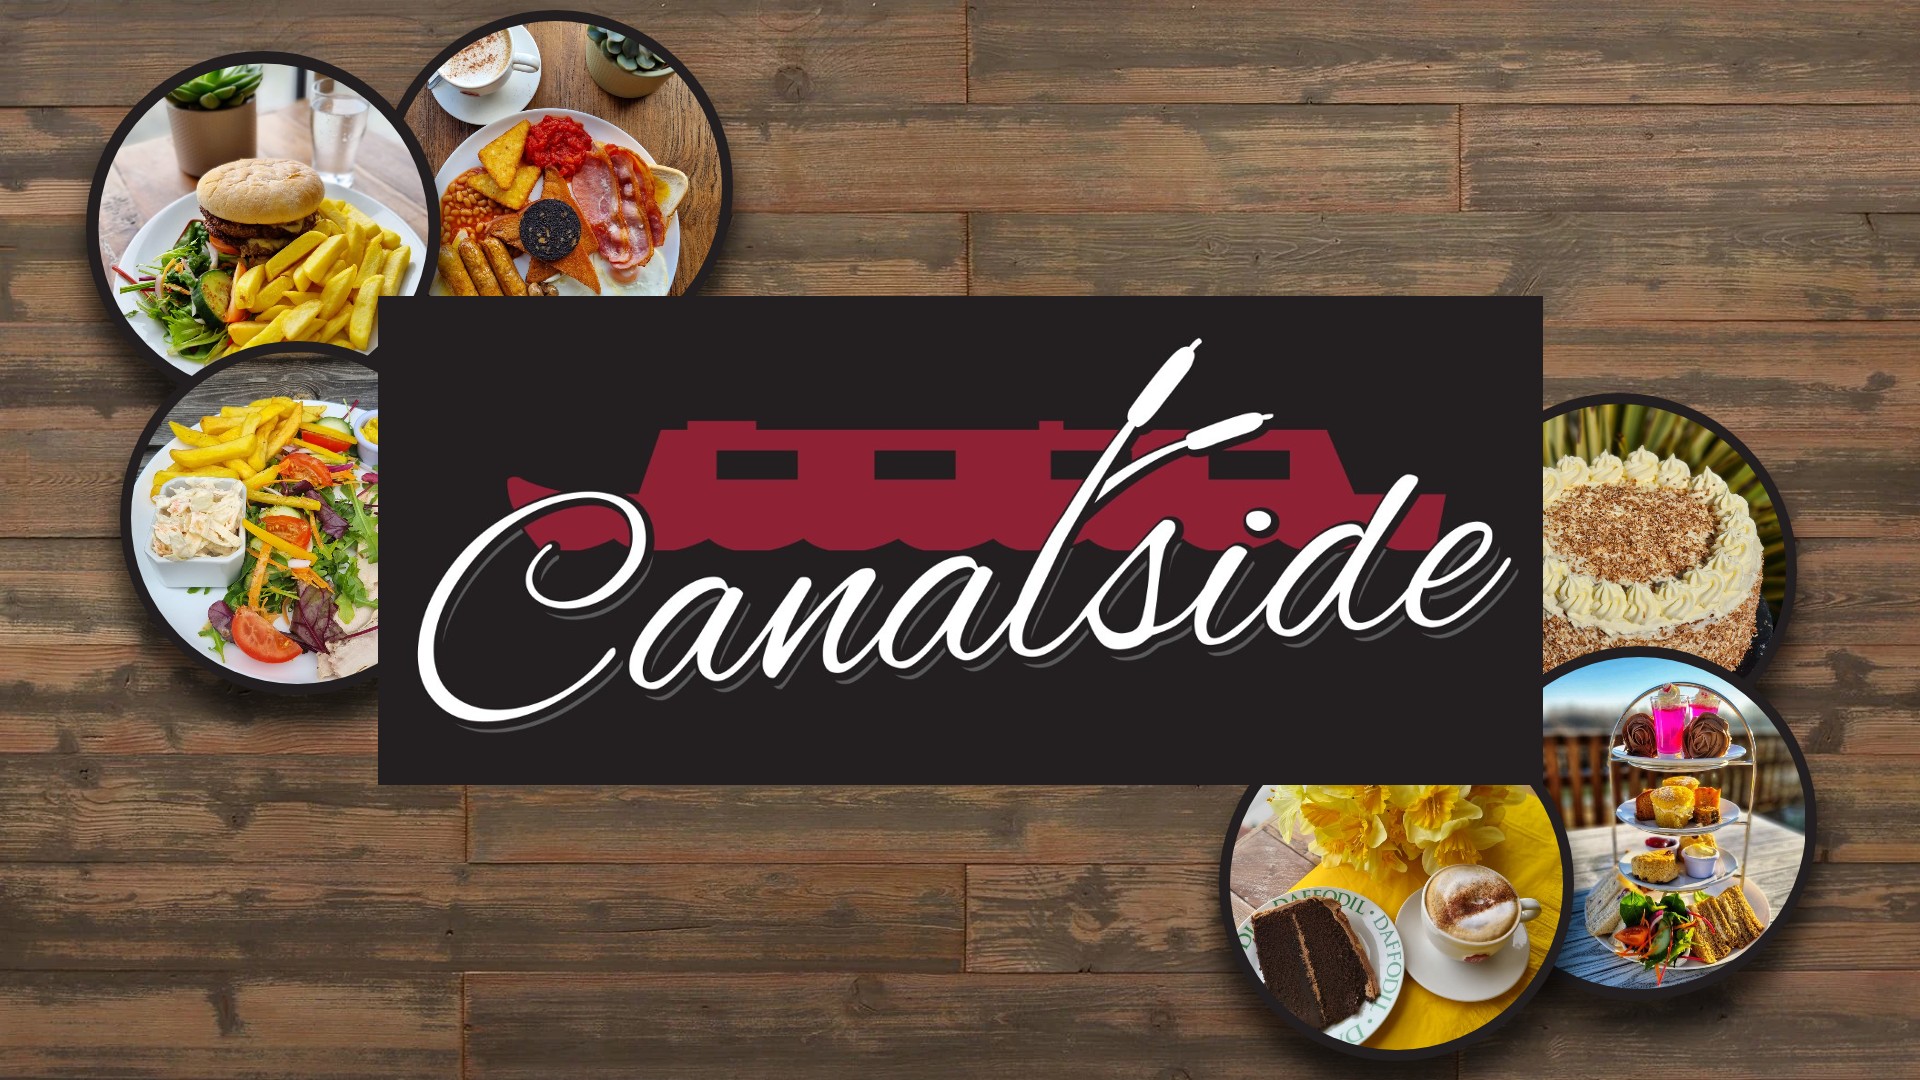 Canalside restaurant at Whilton Locks